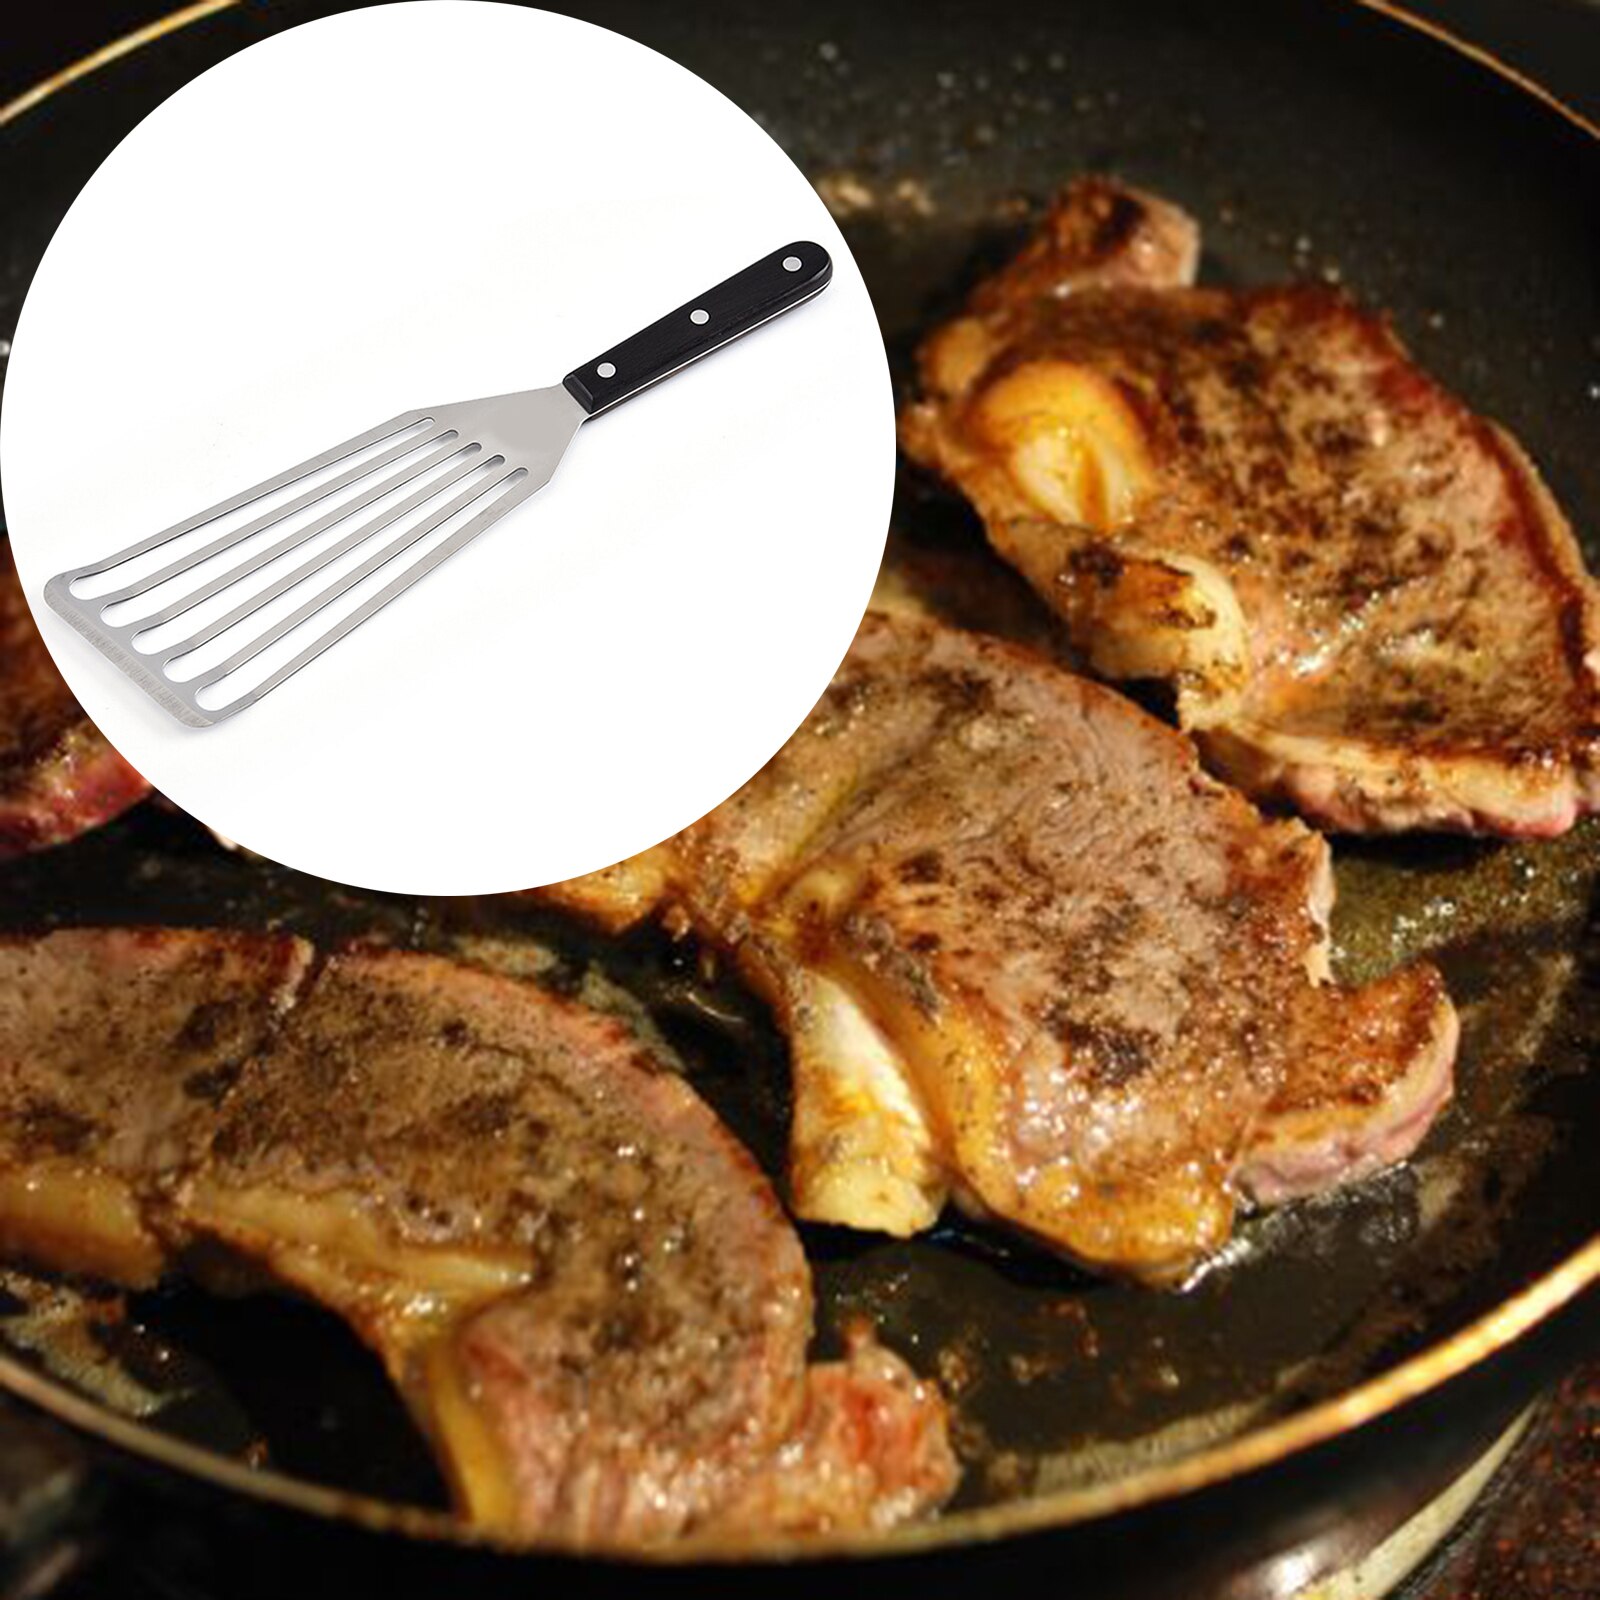 2Pcs Sleuven Spatel Vis Spatel Keuken Multifunctionele Tool Voor Vlees Bbq Bak Houten Handvat Vis Multipurpose Steak Spatel